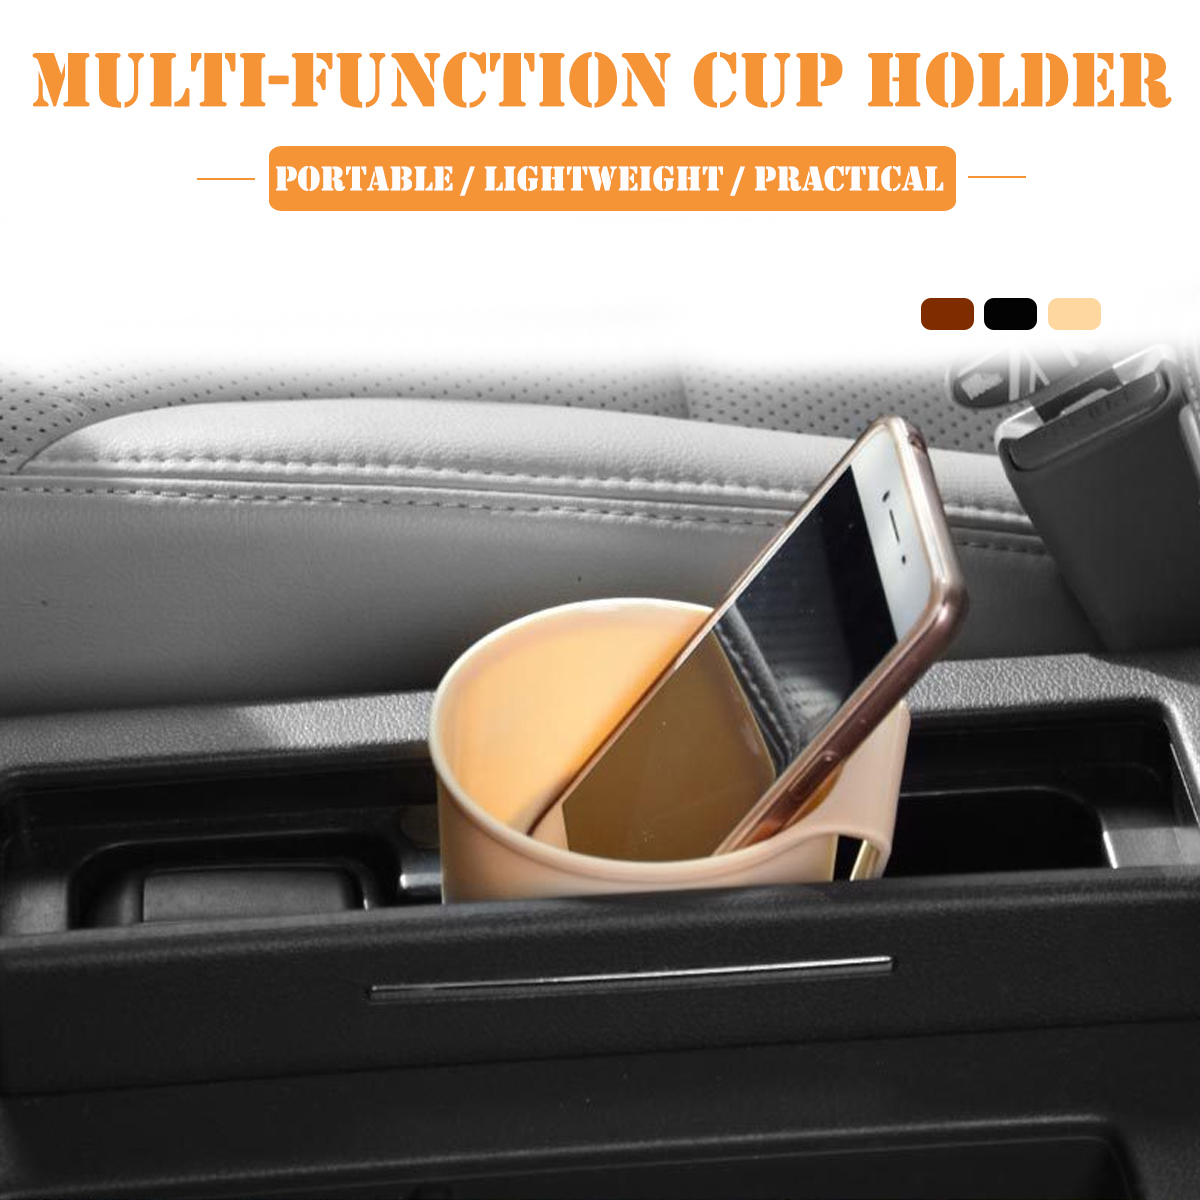 Multi-function-Car-DrinksCanCup-Holder-Portable-Lightweight-Practical-Tools-1732767-2